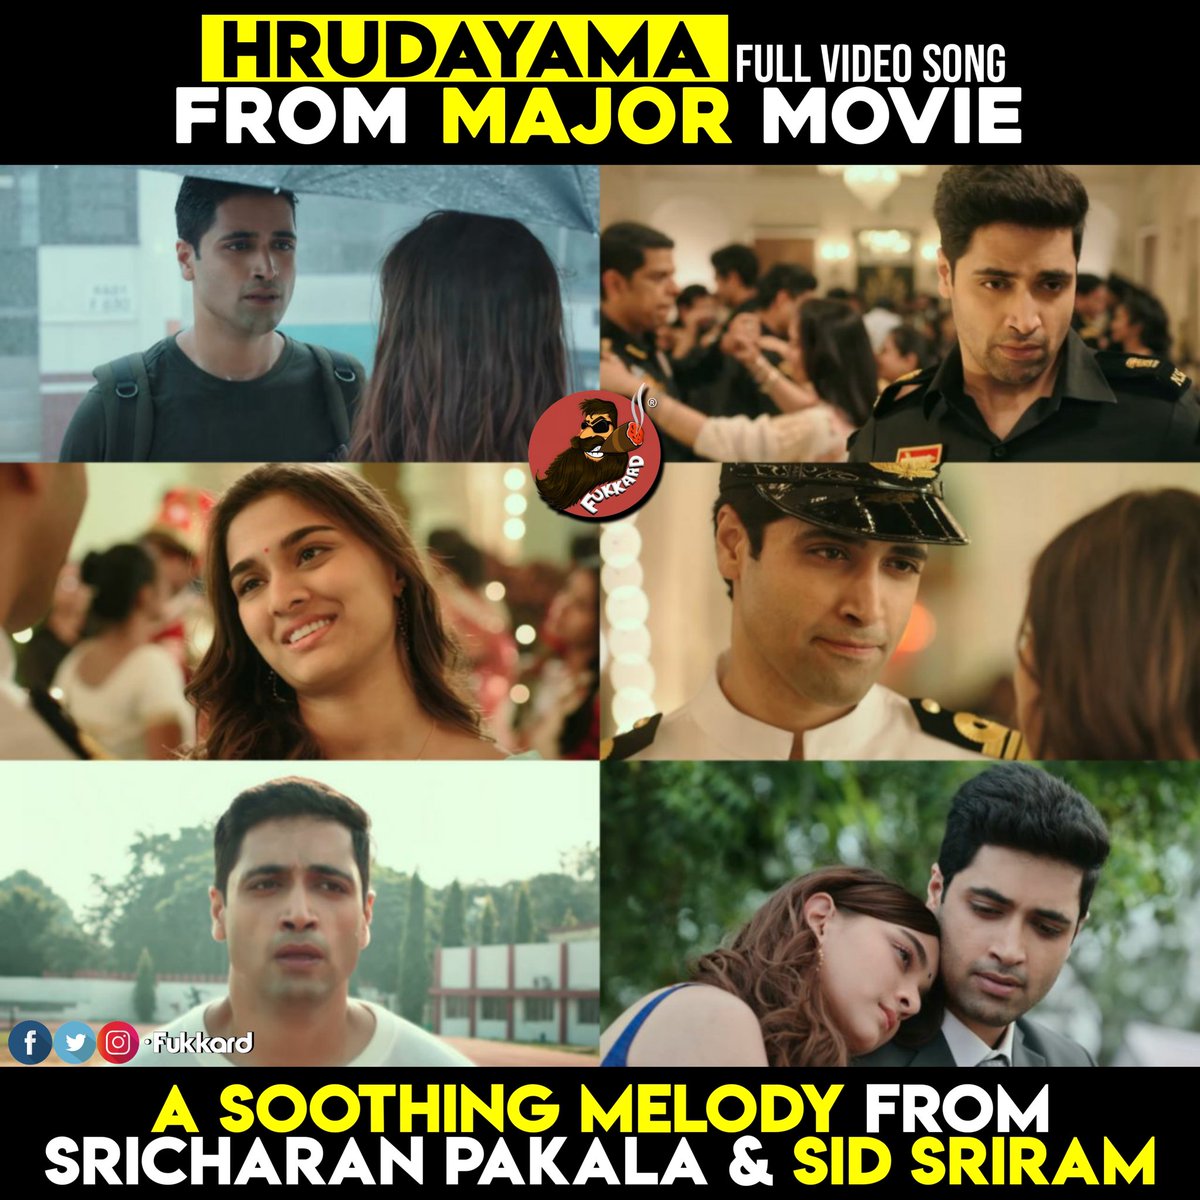 #Hrudayama full video song from #MajorTheFilm ♥️😍
@AdiviSesh @SricharanPakala @sidsriram 

youtu.be/4OuYQX9dfJA